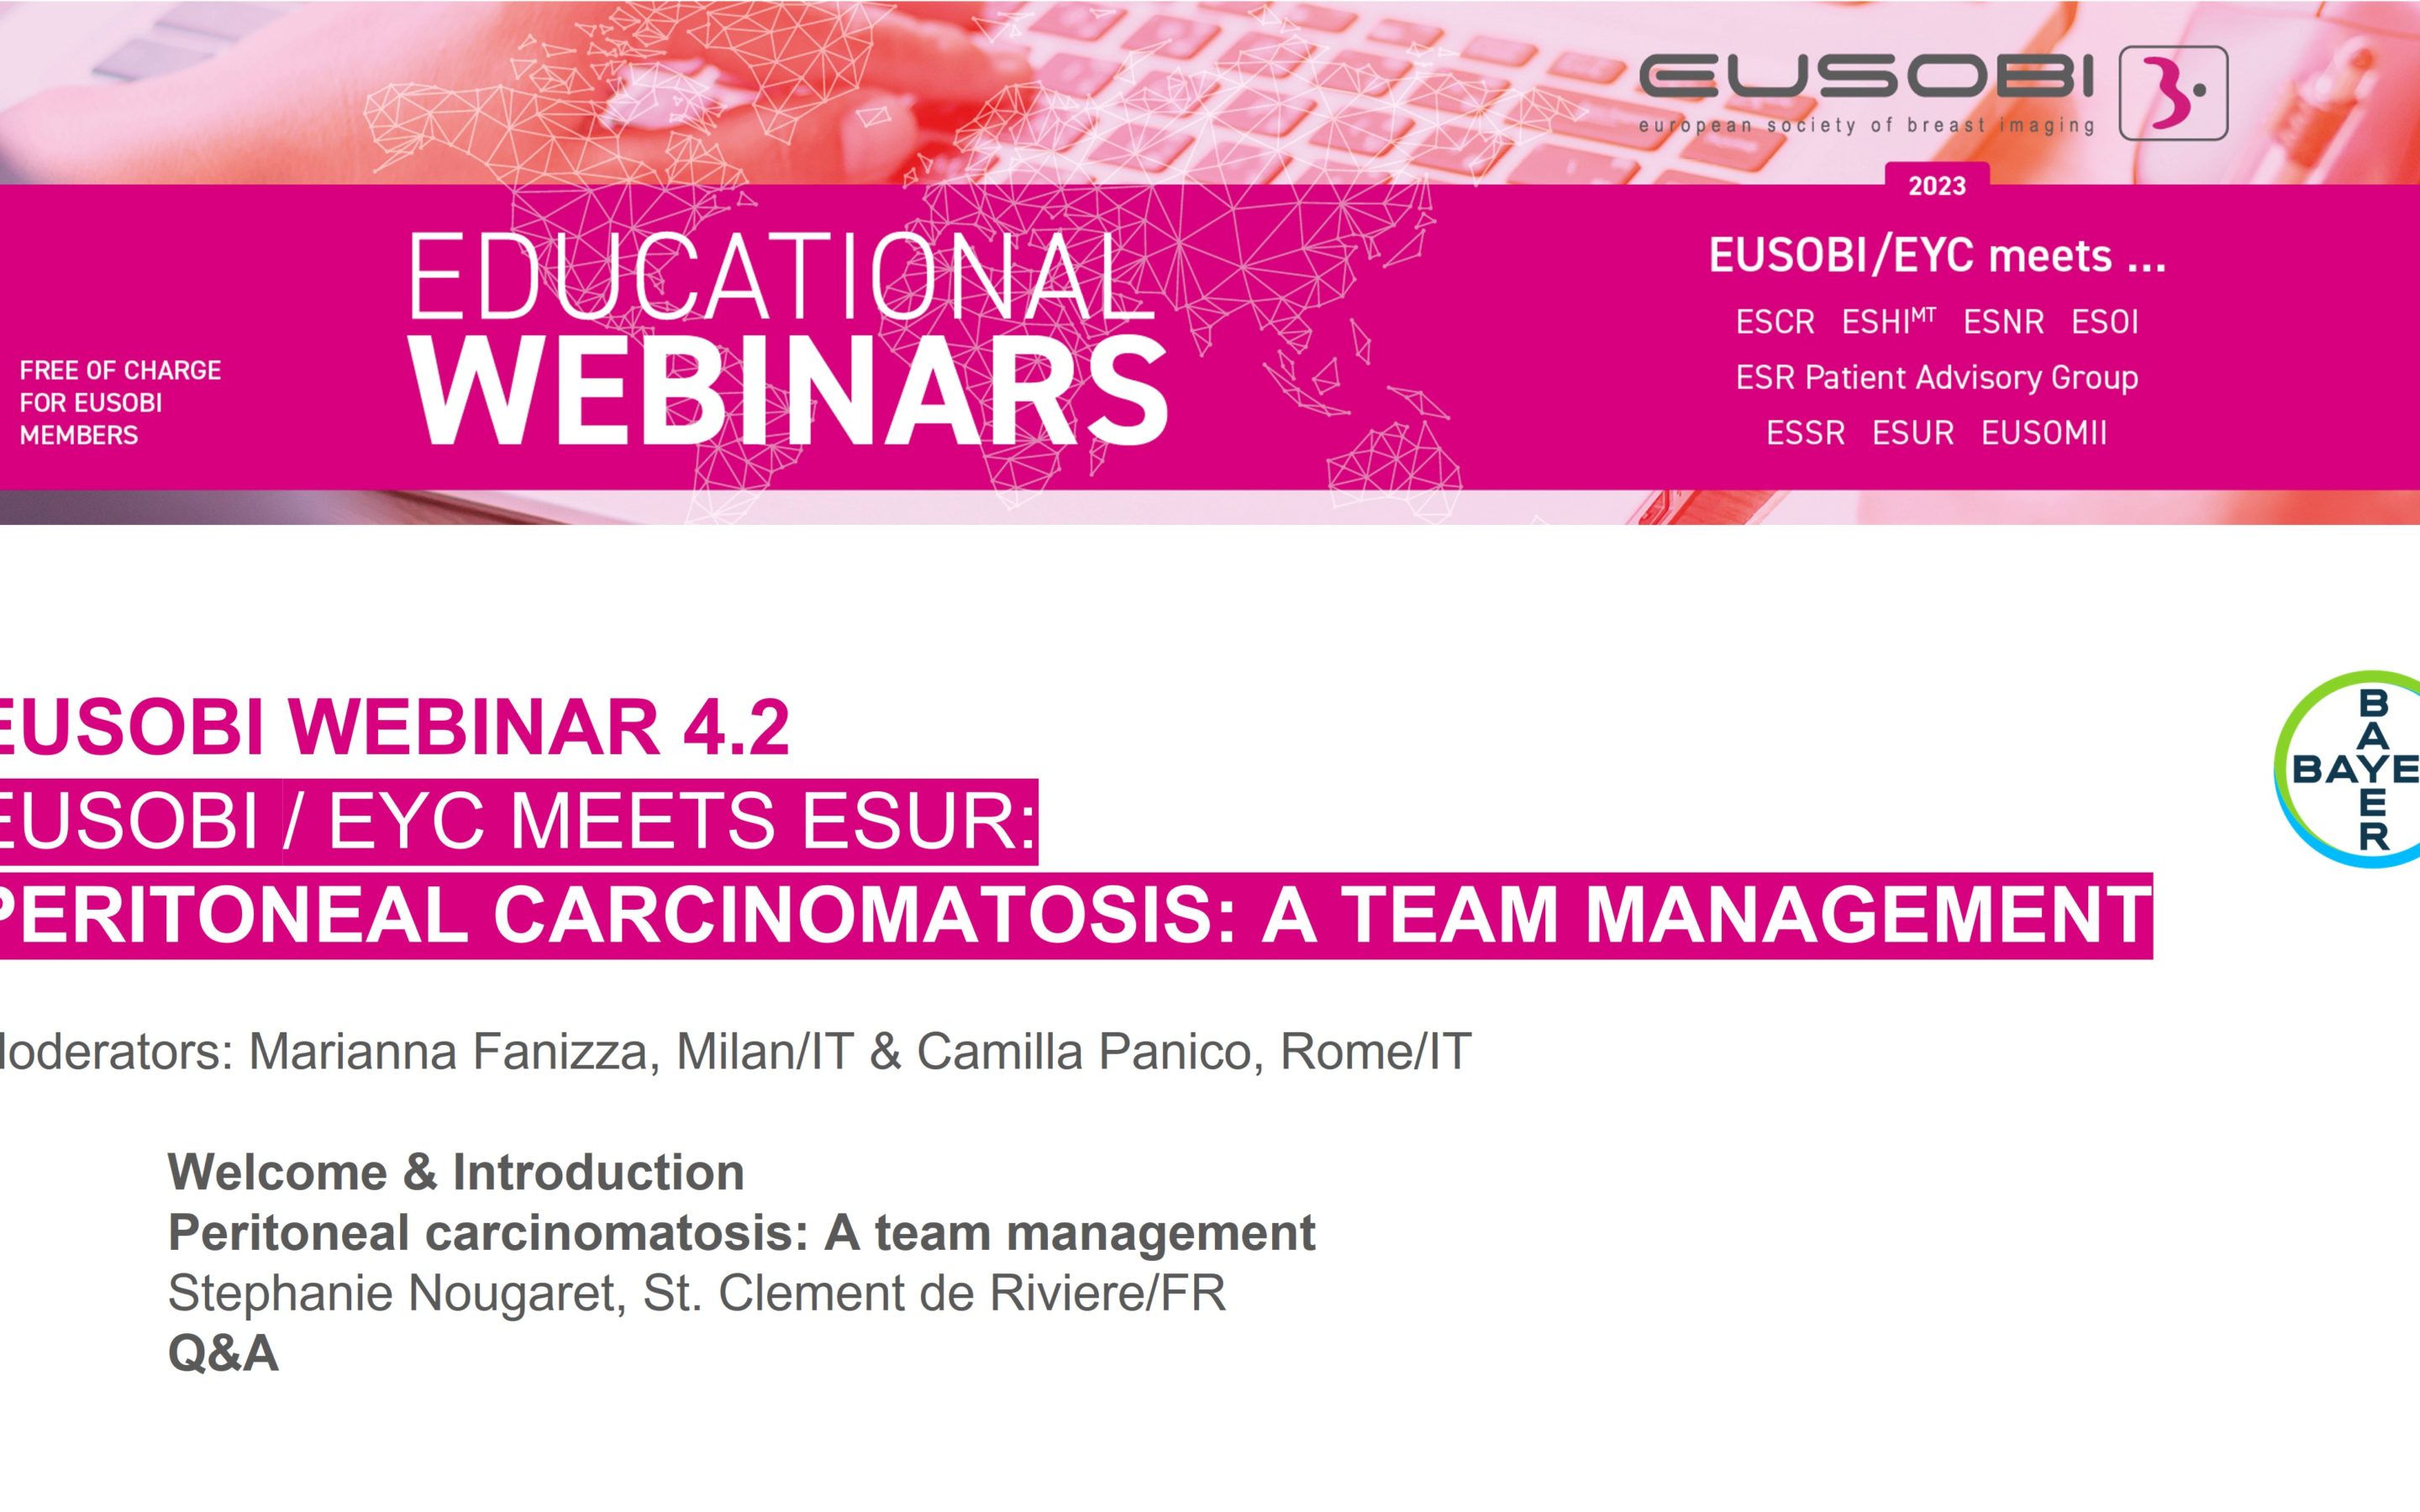 4.2 / …meets ESUR: Peritoneal carcinomatosis: A team management